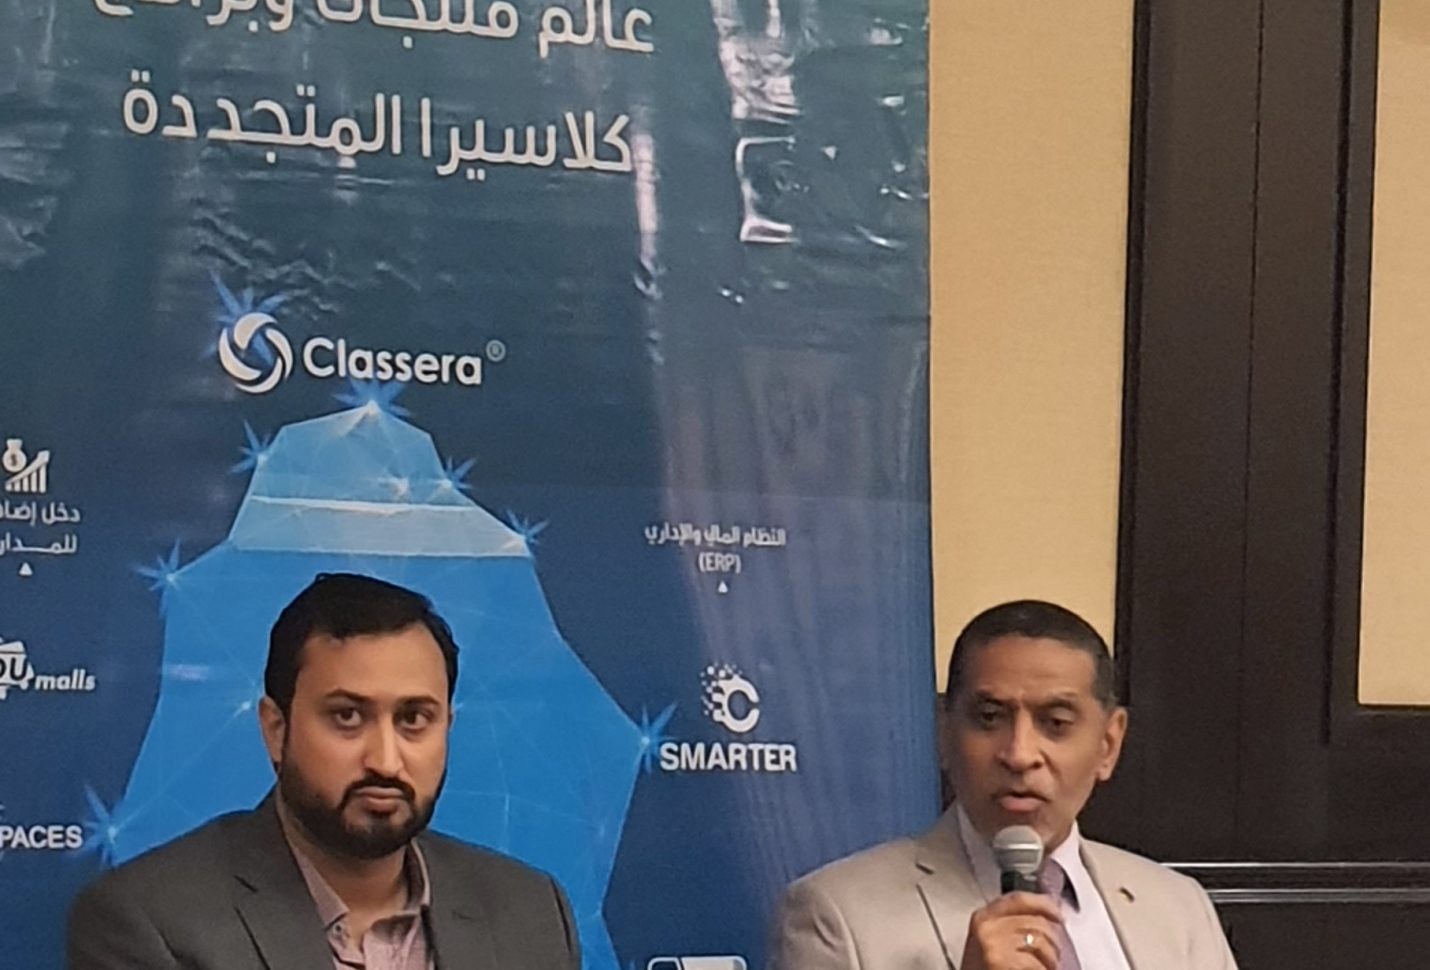 Classera head: Egypt is promising market for e-learning